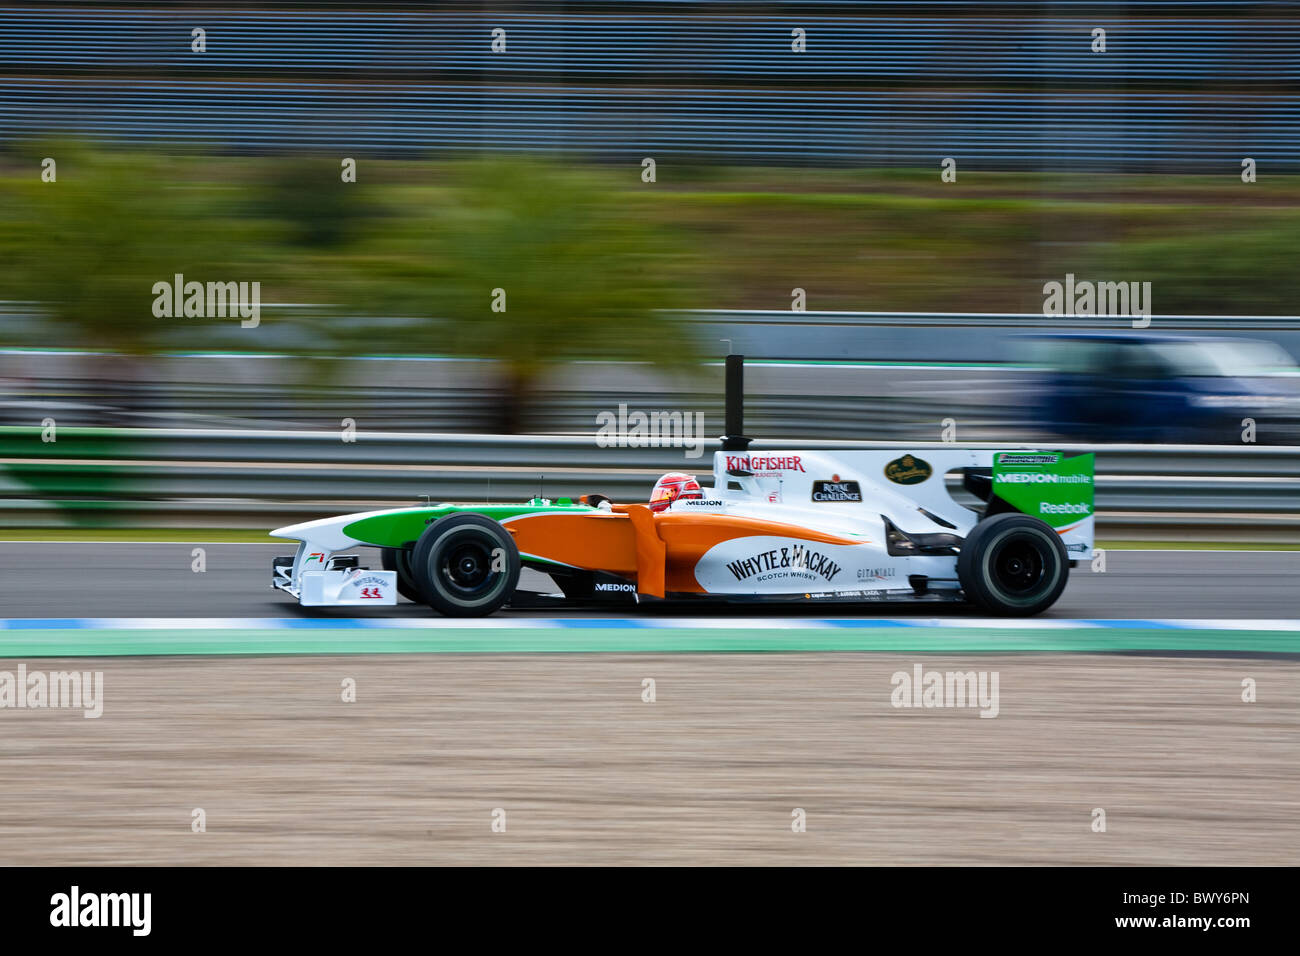 Vitantonio Liuzzi at the 2010 Jerez practice in his Force India, Formula 1 car, Spain. Motion blur, panning. Stock Photo